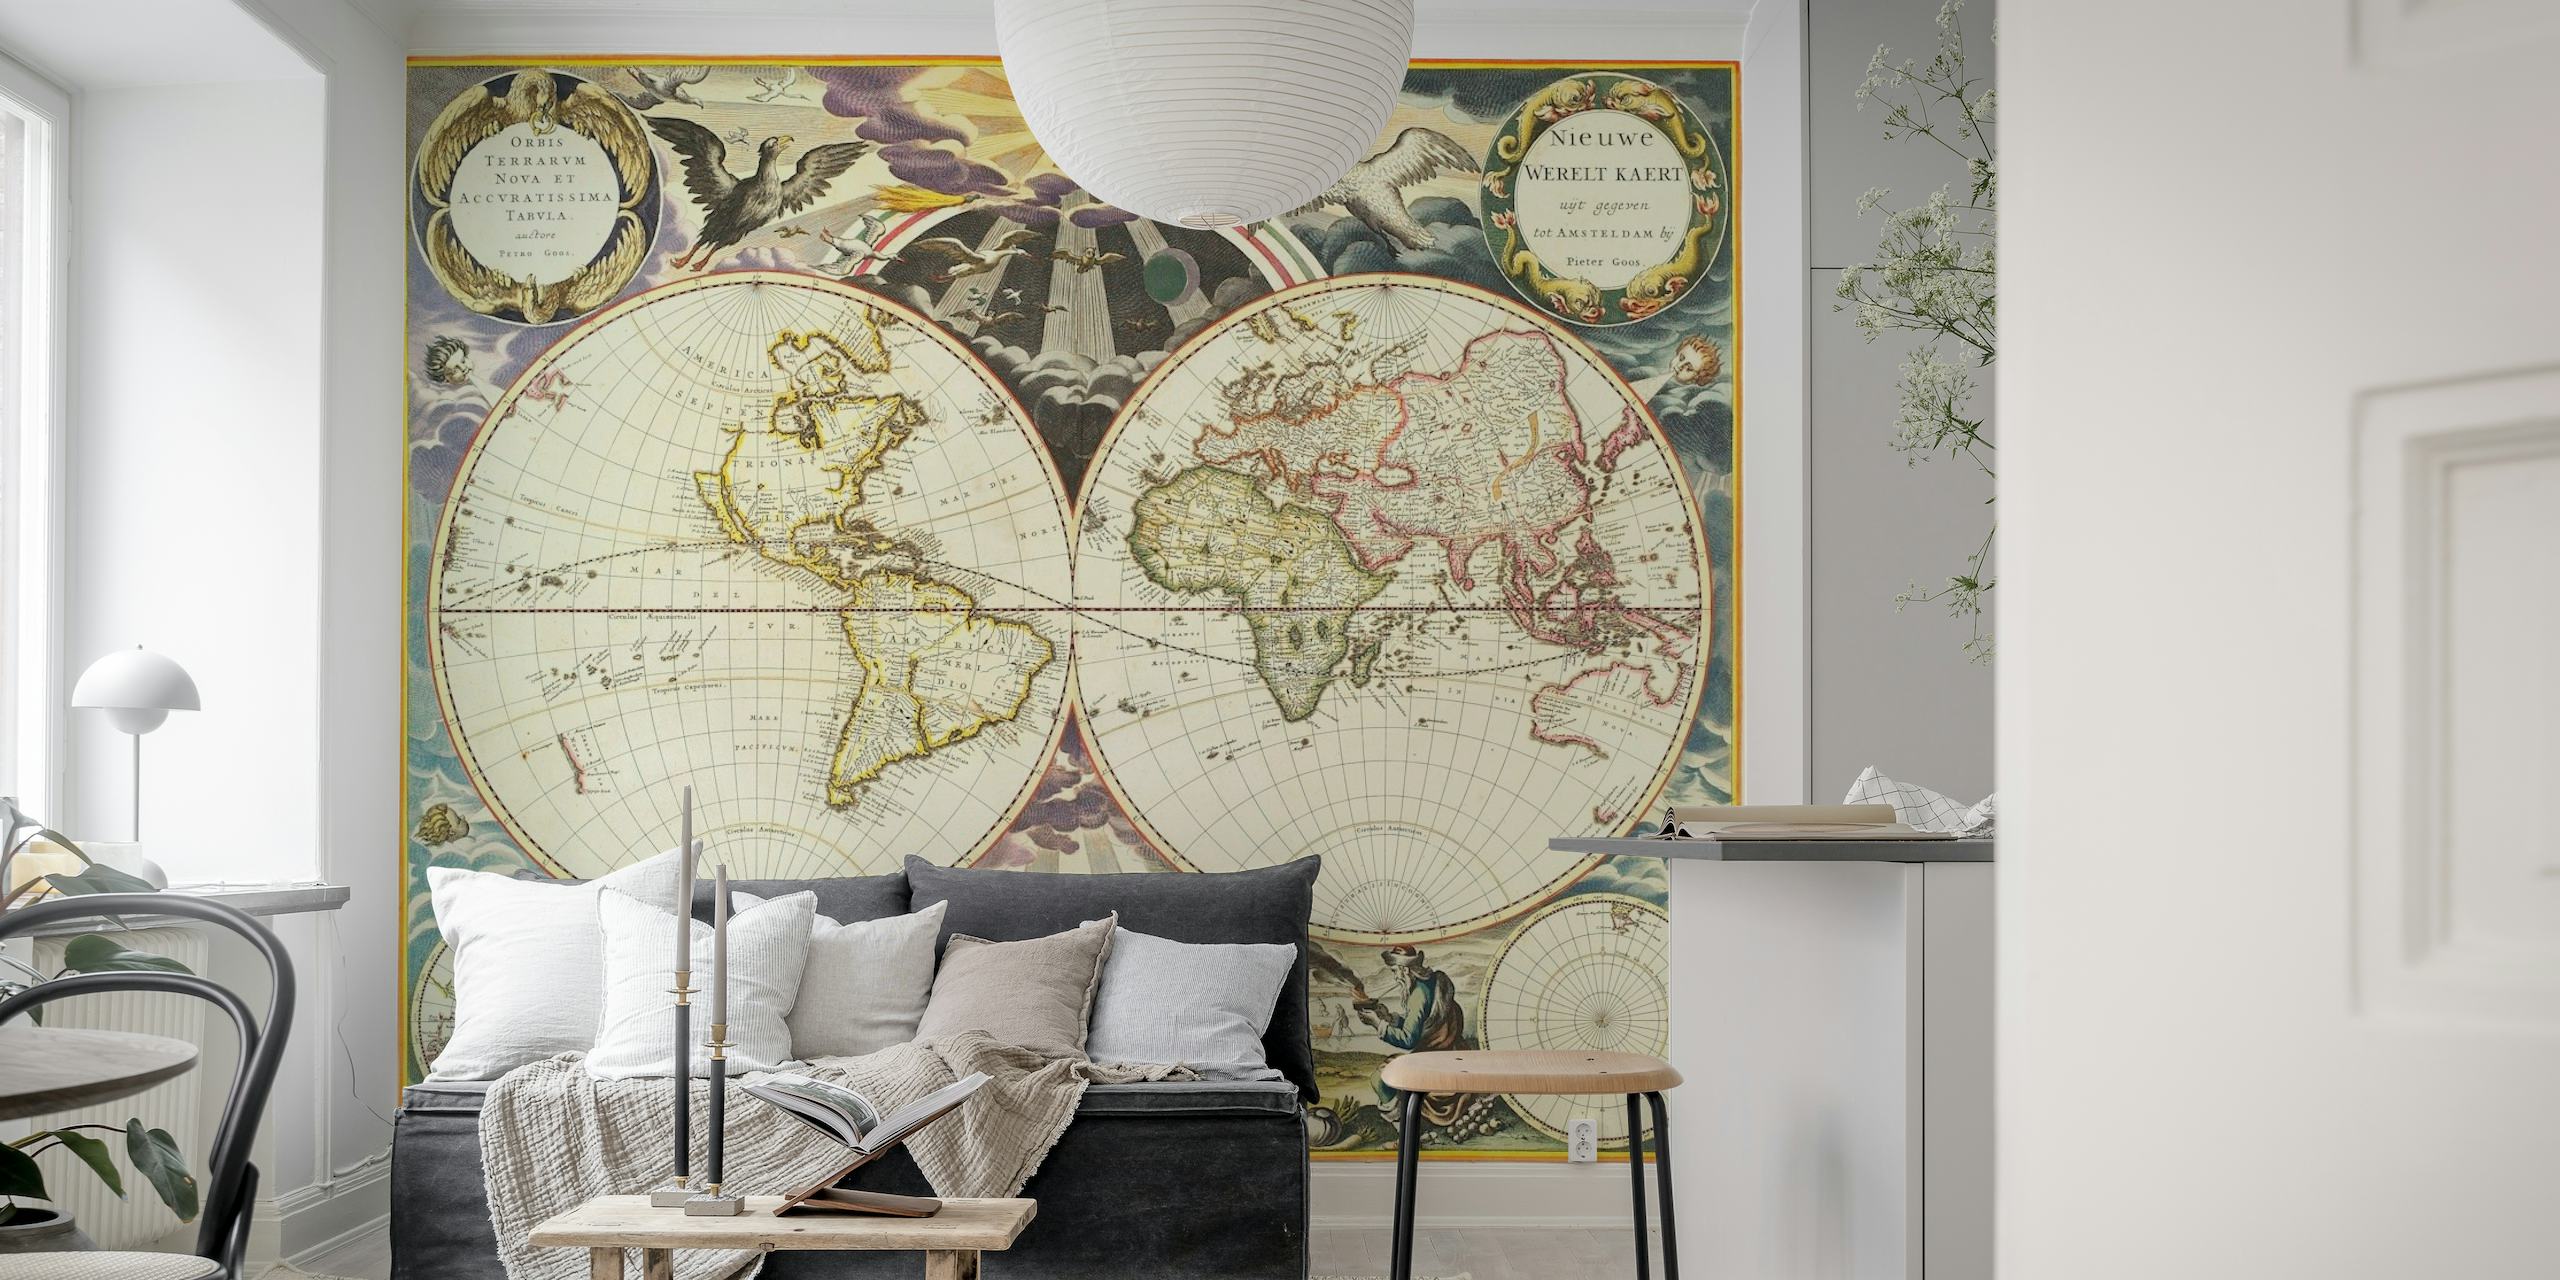 Antikke verdenskart-veggmaleri med vintage design med dobbel halvkule og dekorative elementer